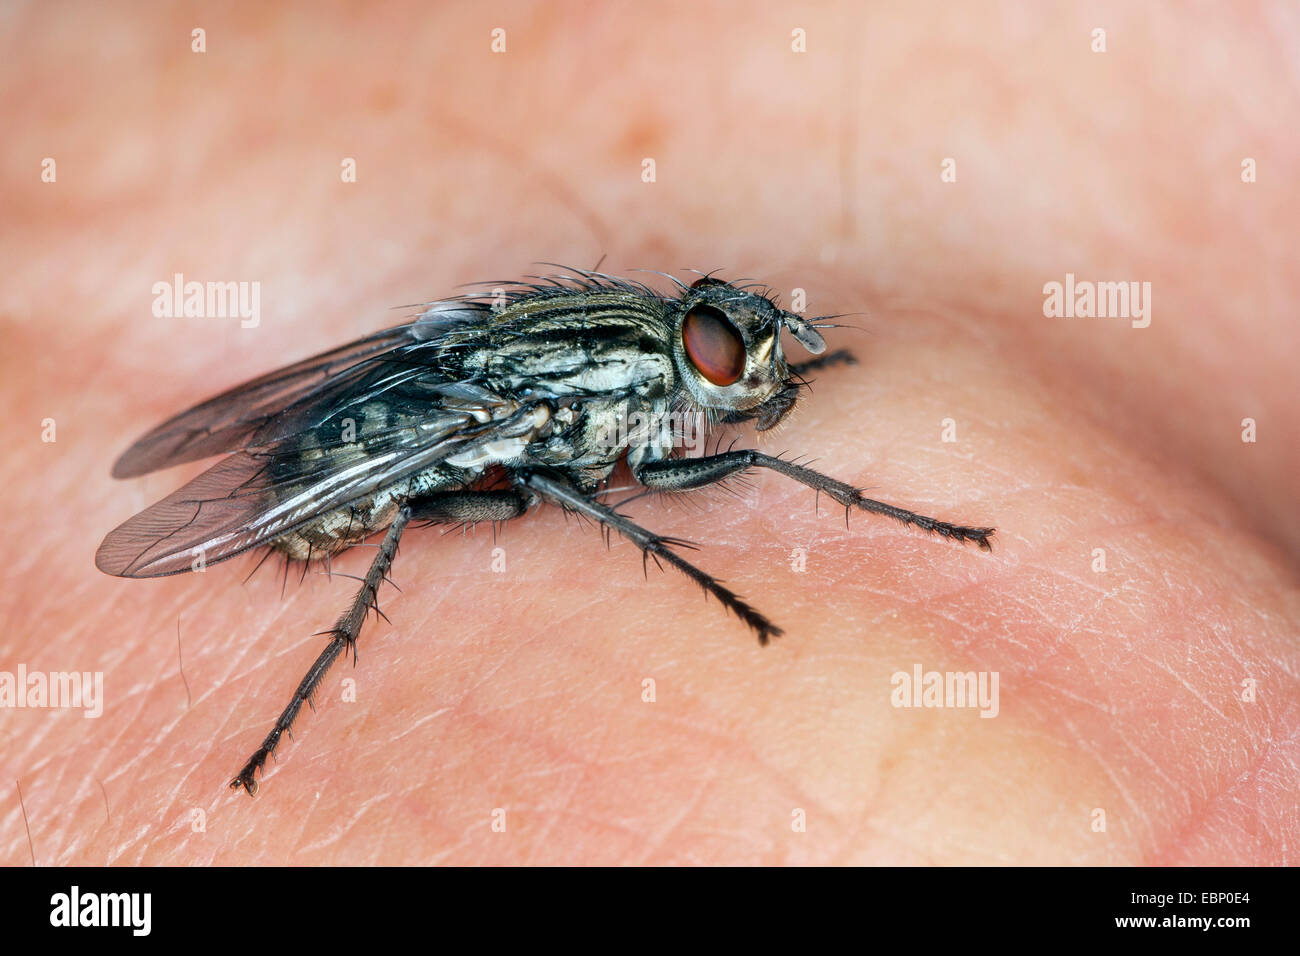 Feshfly, fesh-fly (Sarcophaga spec.), sulla pelle umana, Germania Foto Stock